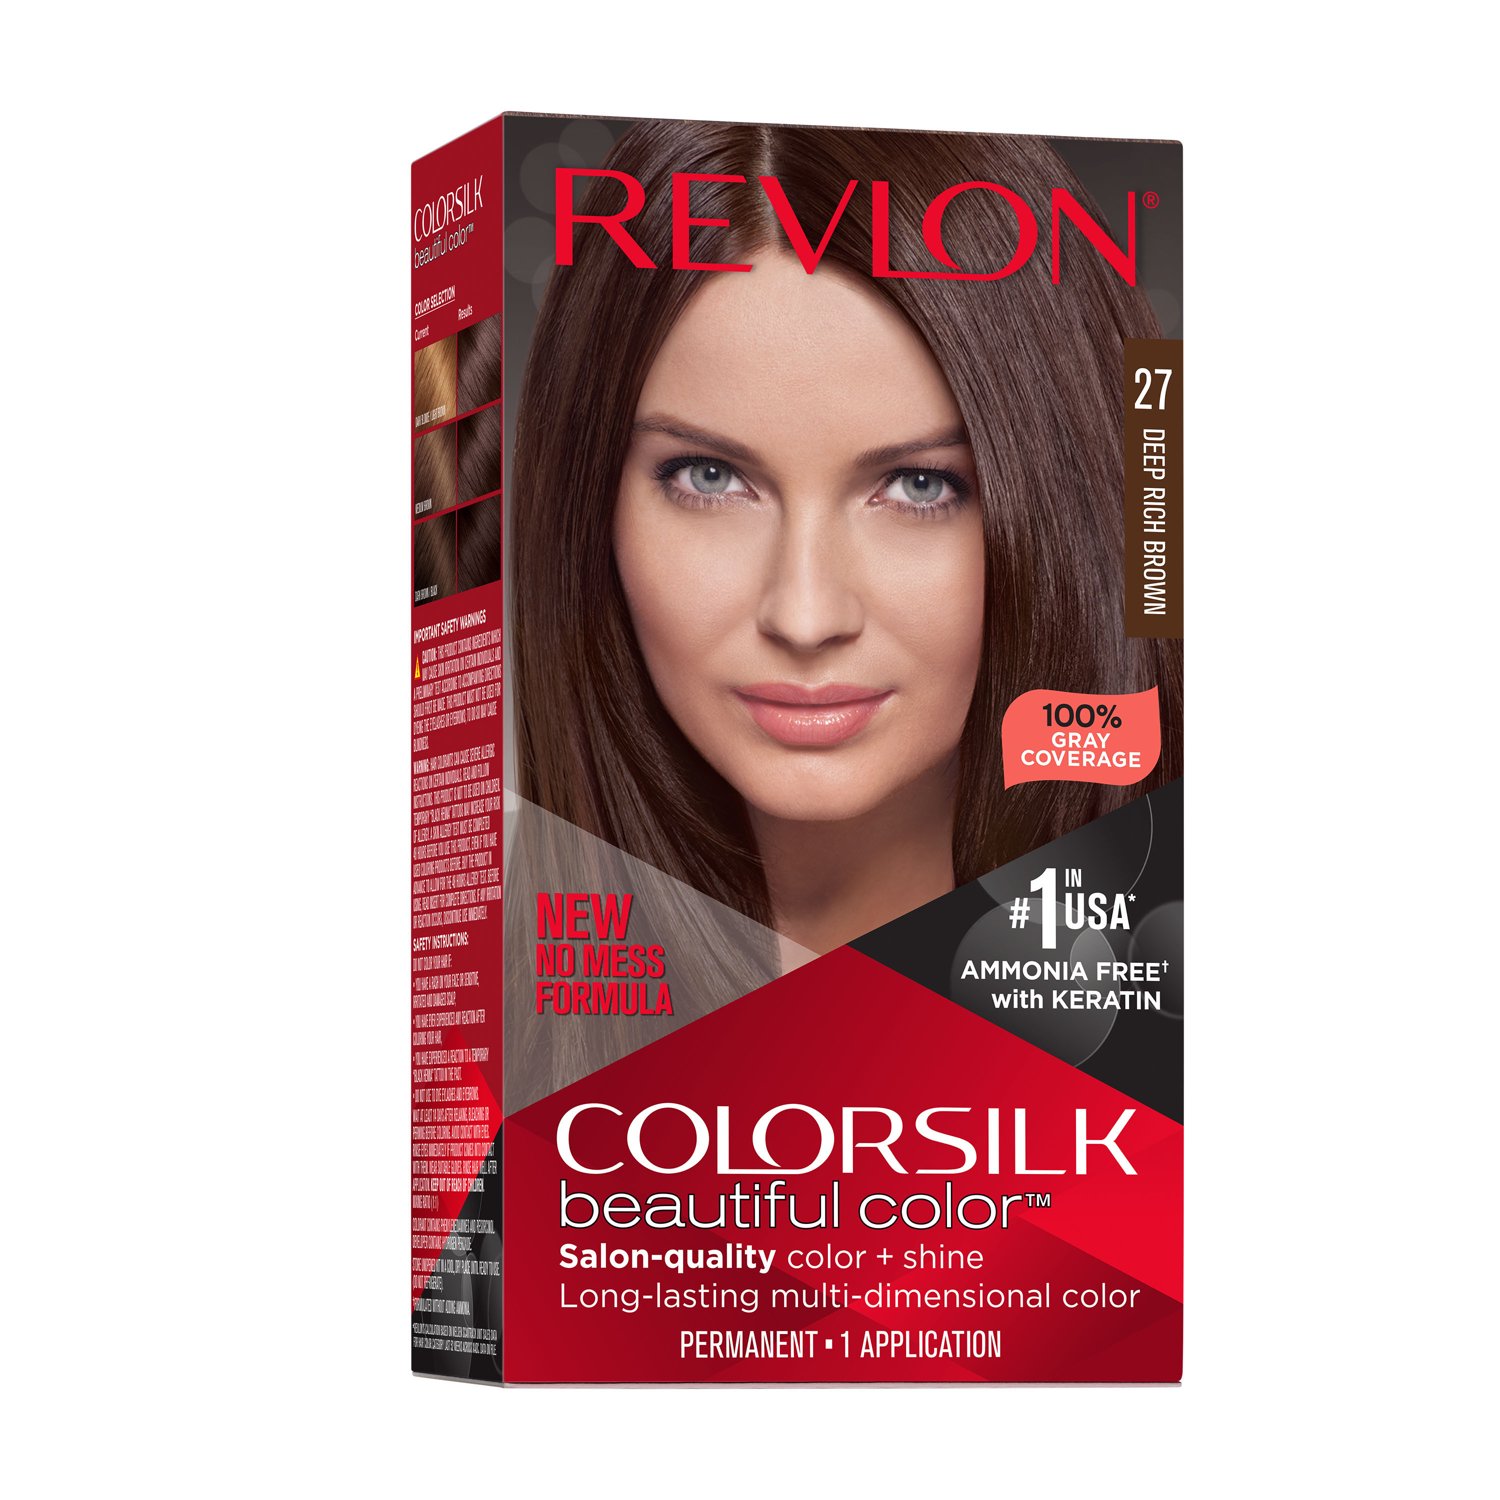 Revlon Colorsilk Beautiful Color Long Lasting Permanent Hair Color, 027 Deep Rich Brown - image 1 of 14